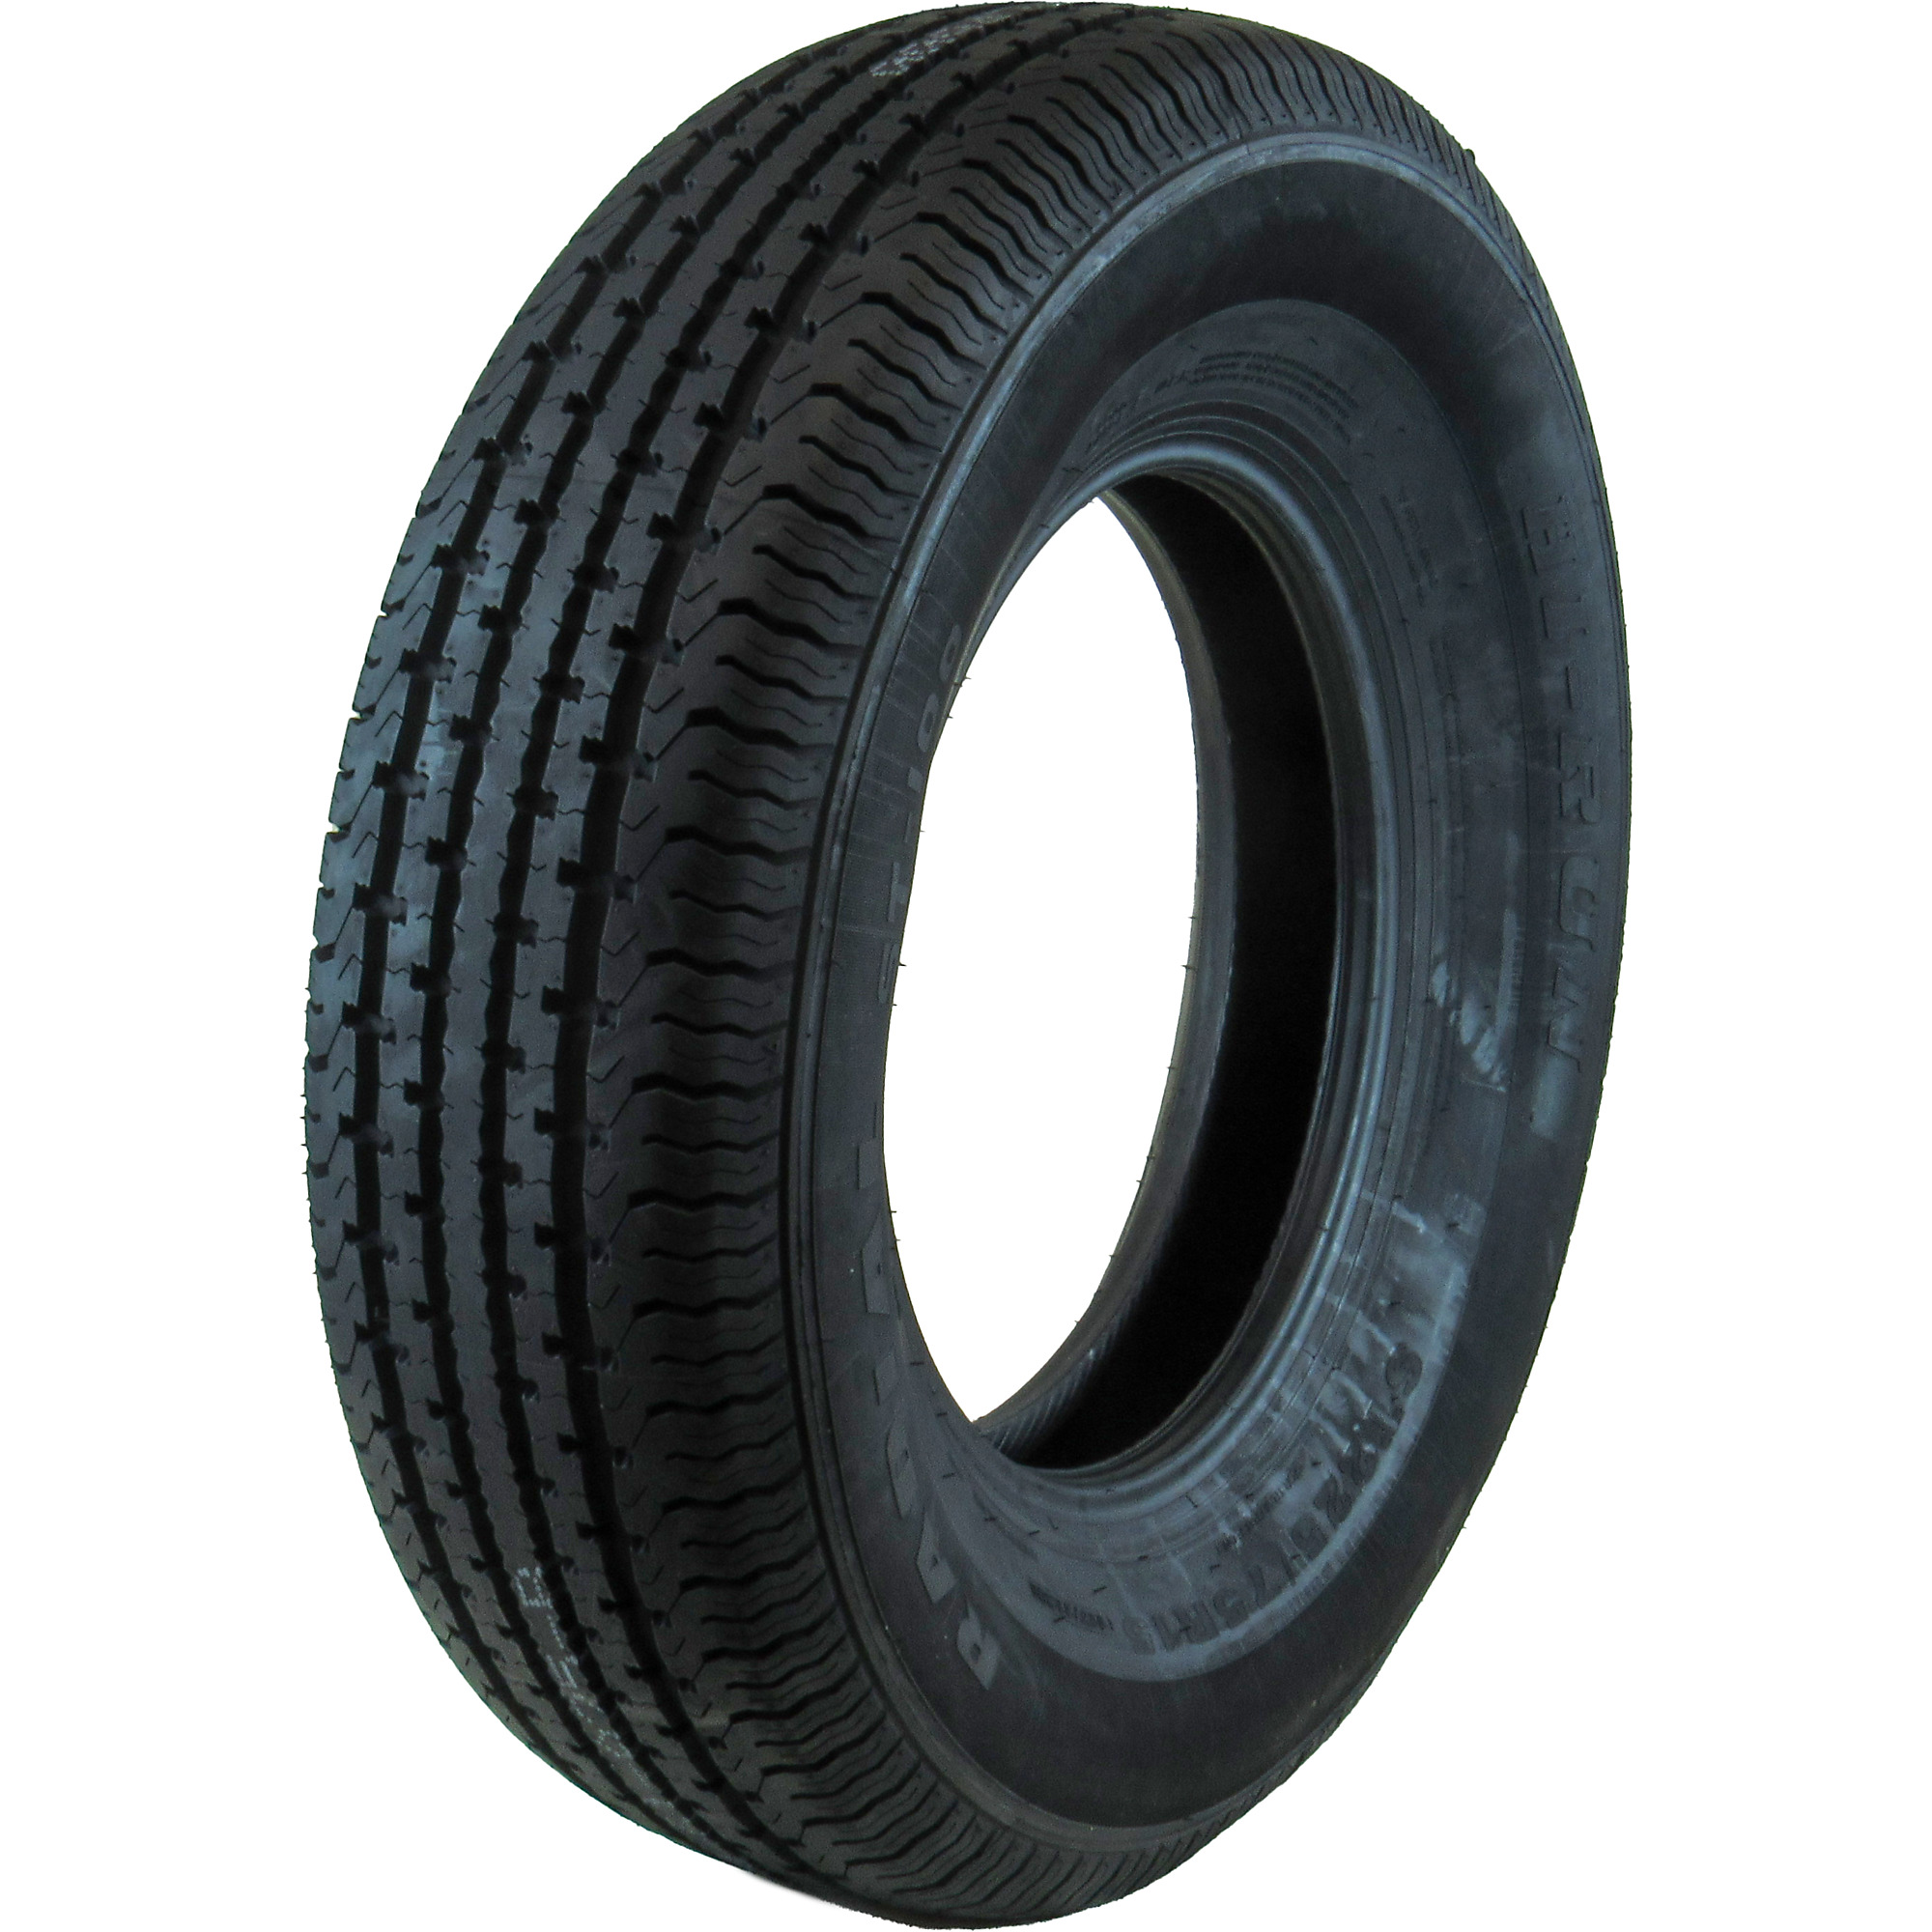 HI-RUN, Highway Trailer Tire, Radial-ply, Tire Size ST225/75R15 Load Range Rating E, Model HZT1006